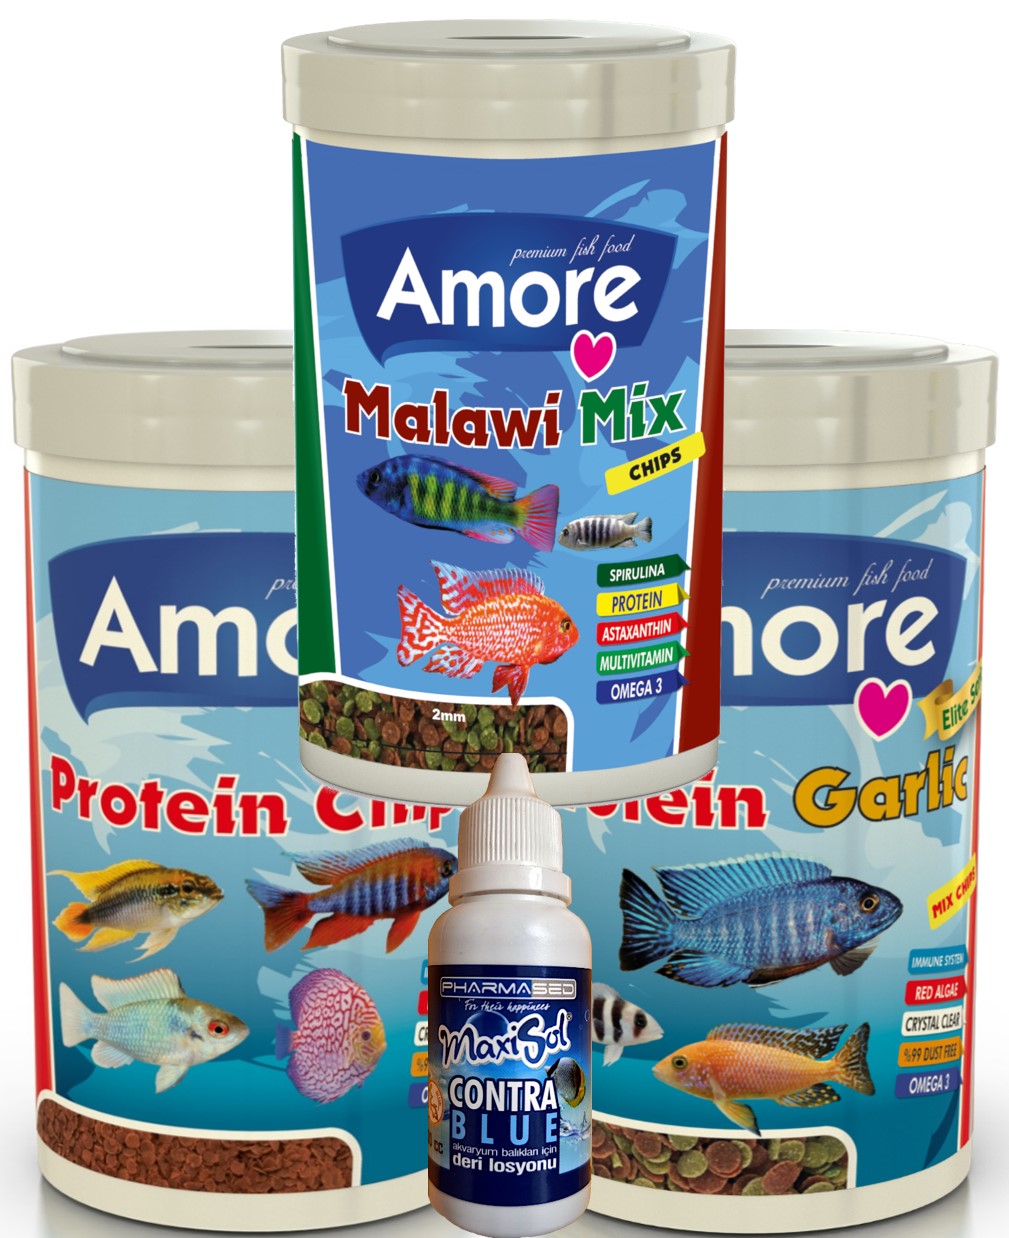 Amore Elite 50-protein Red Algae Pro Chips Ve 48-protein Garlic Chips Ve Malawi Mix 250ml Kutu Balık Yemi